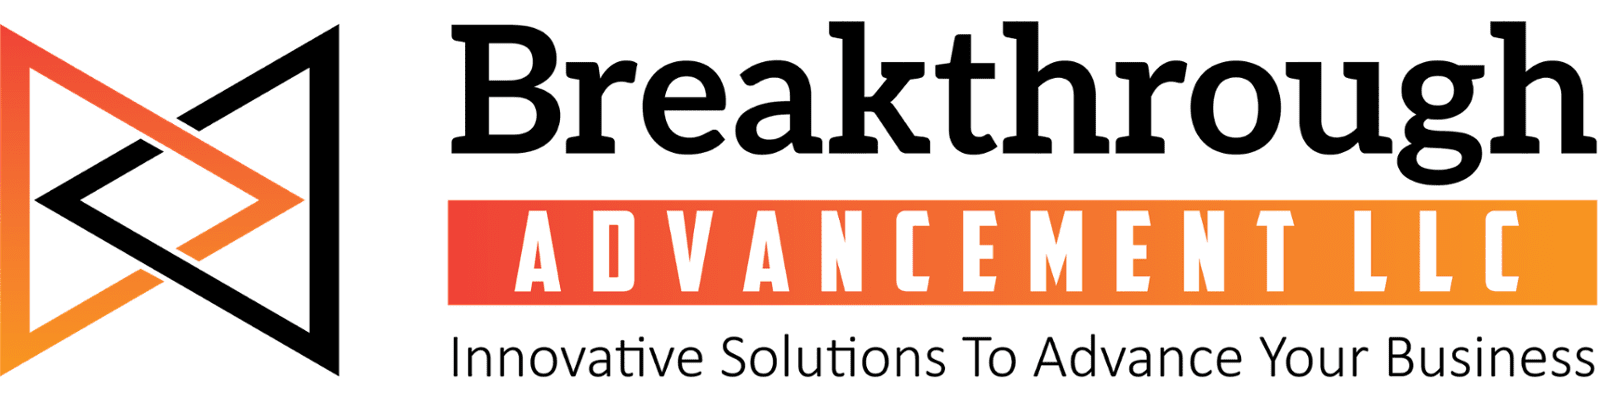 Breakthrough Advancement LLC